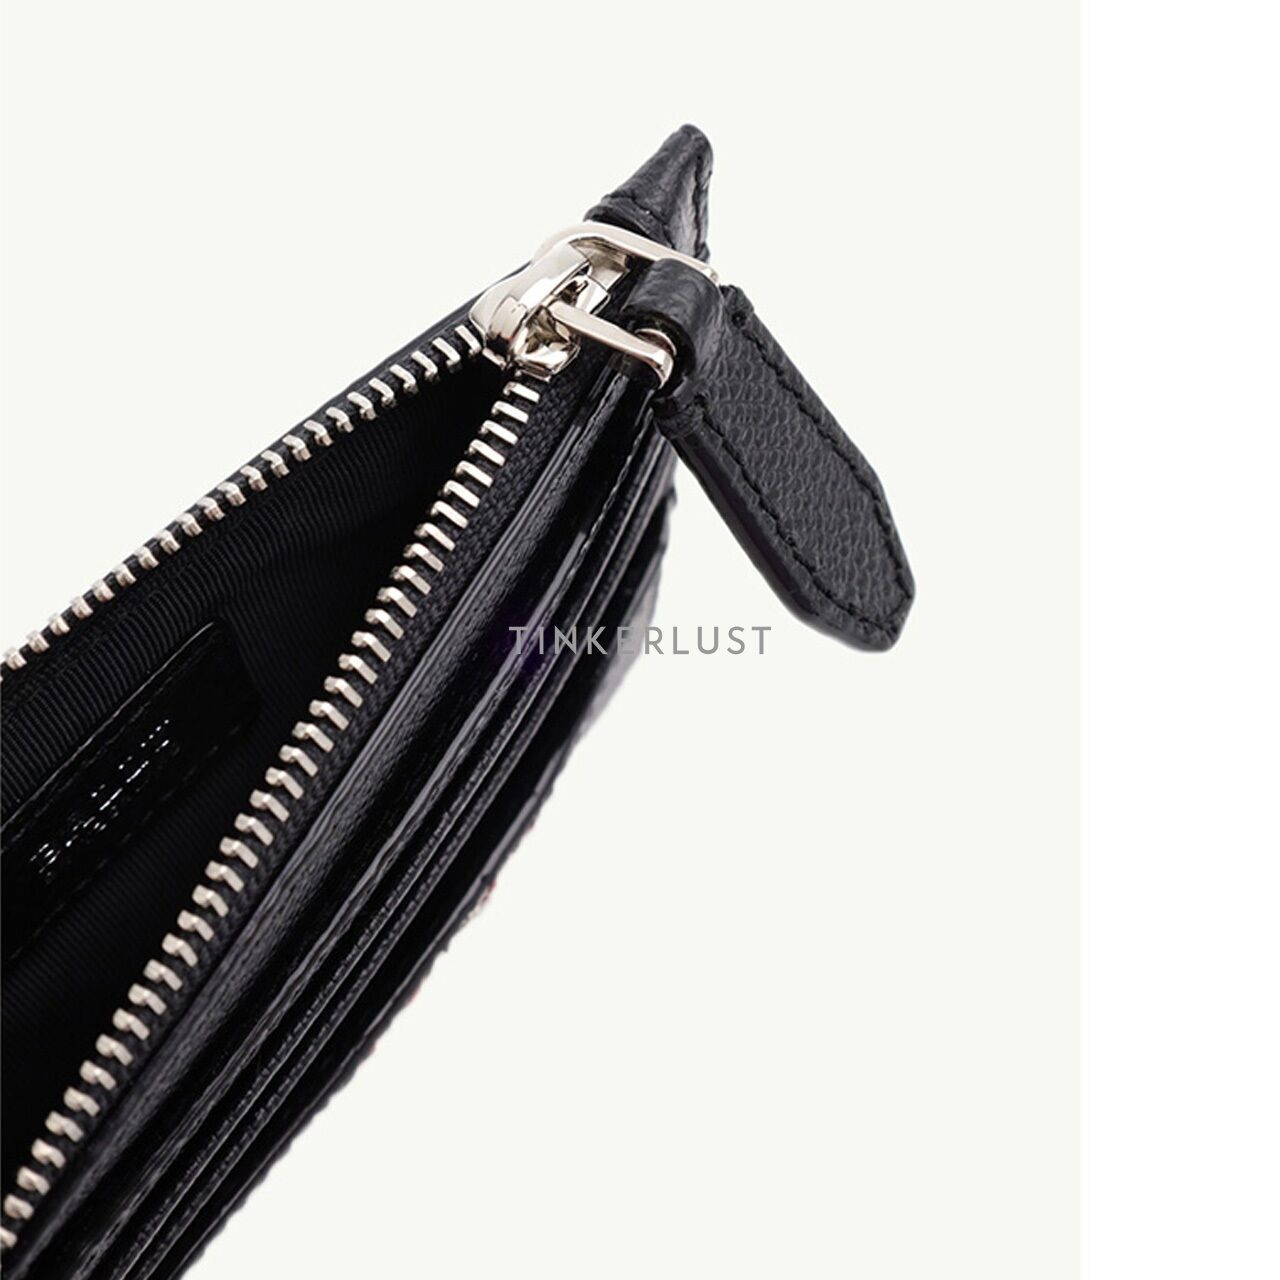 Bally Torck Zipper Card Holder in Black Bovine Leather Wallet